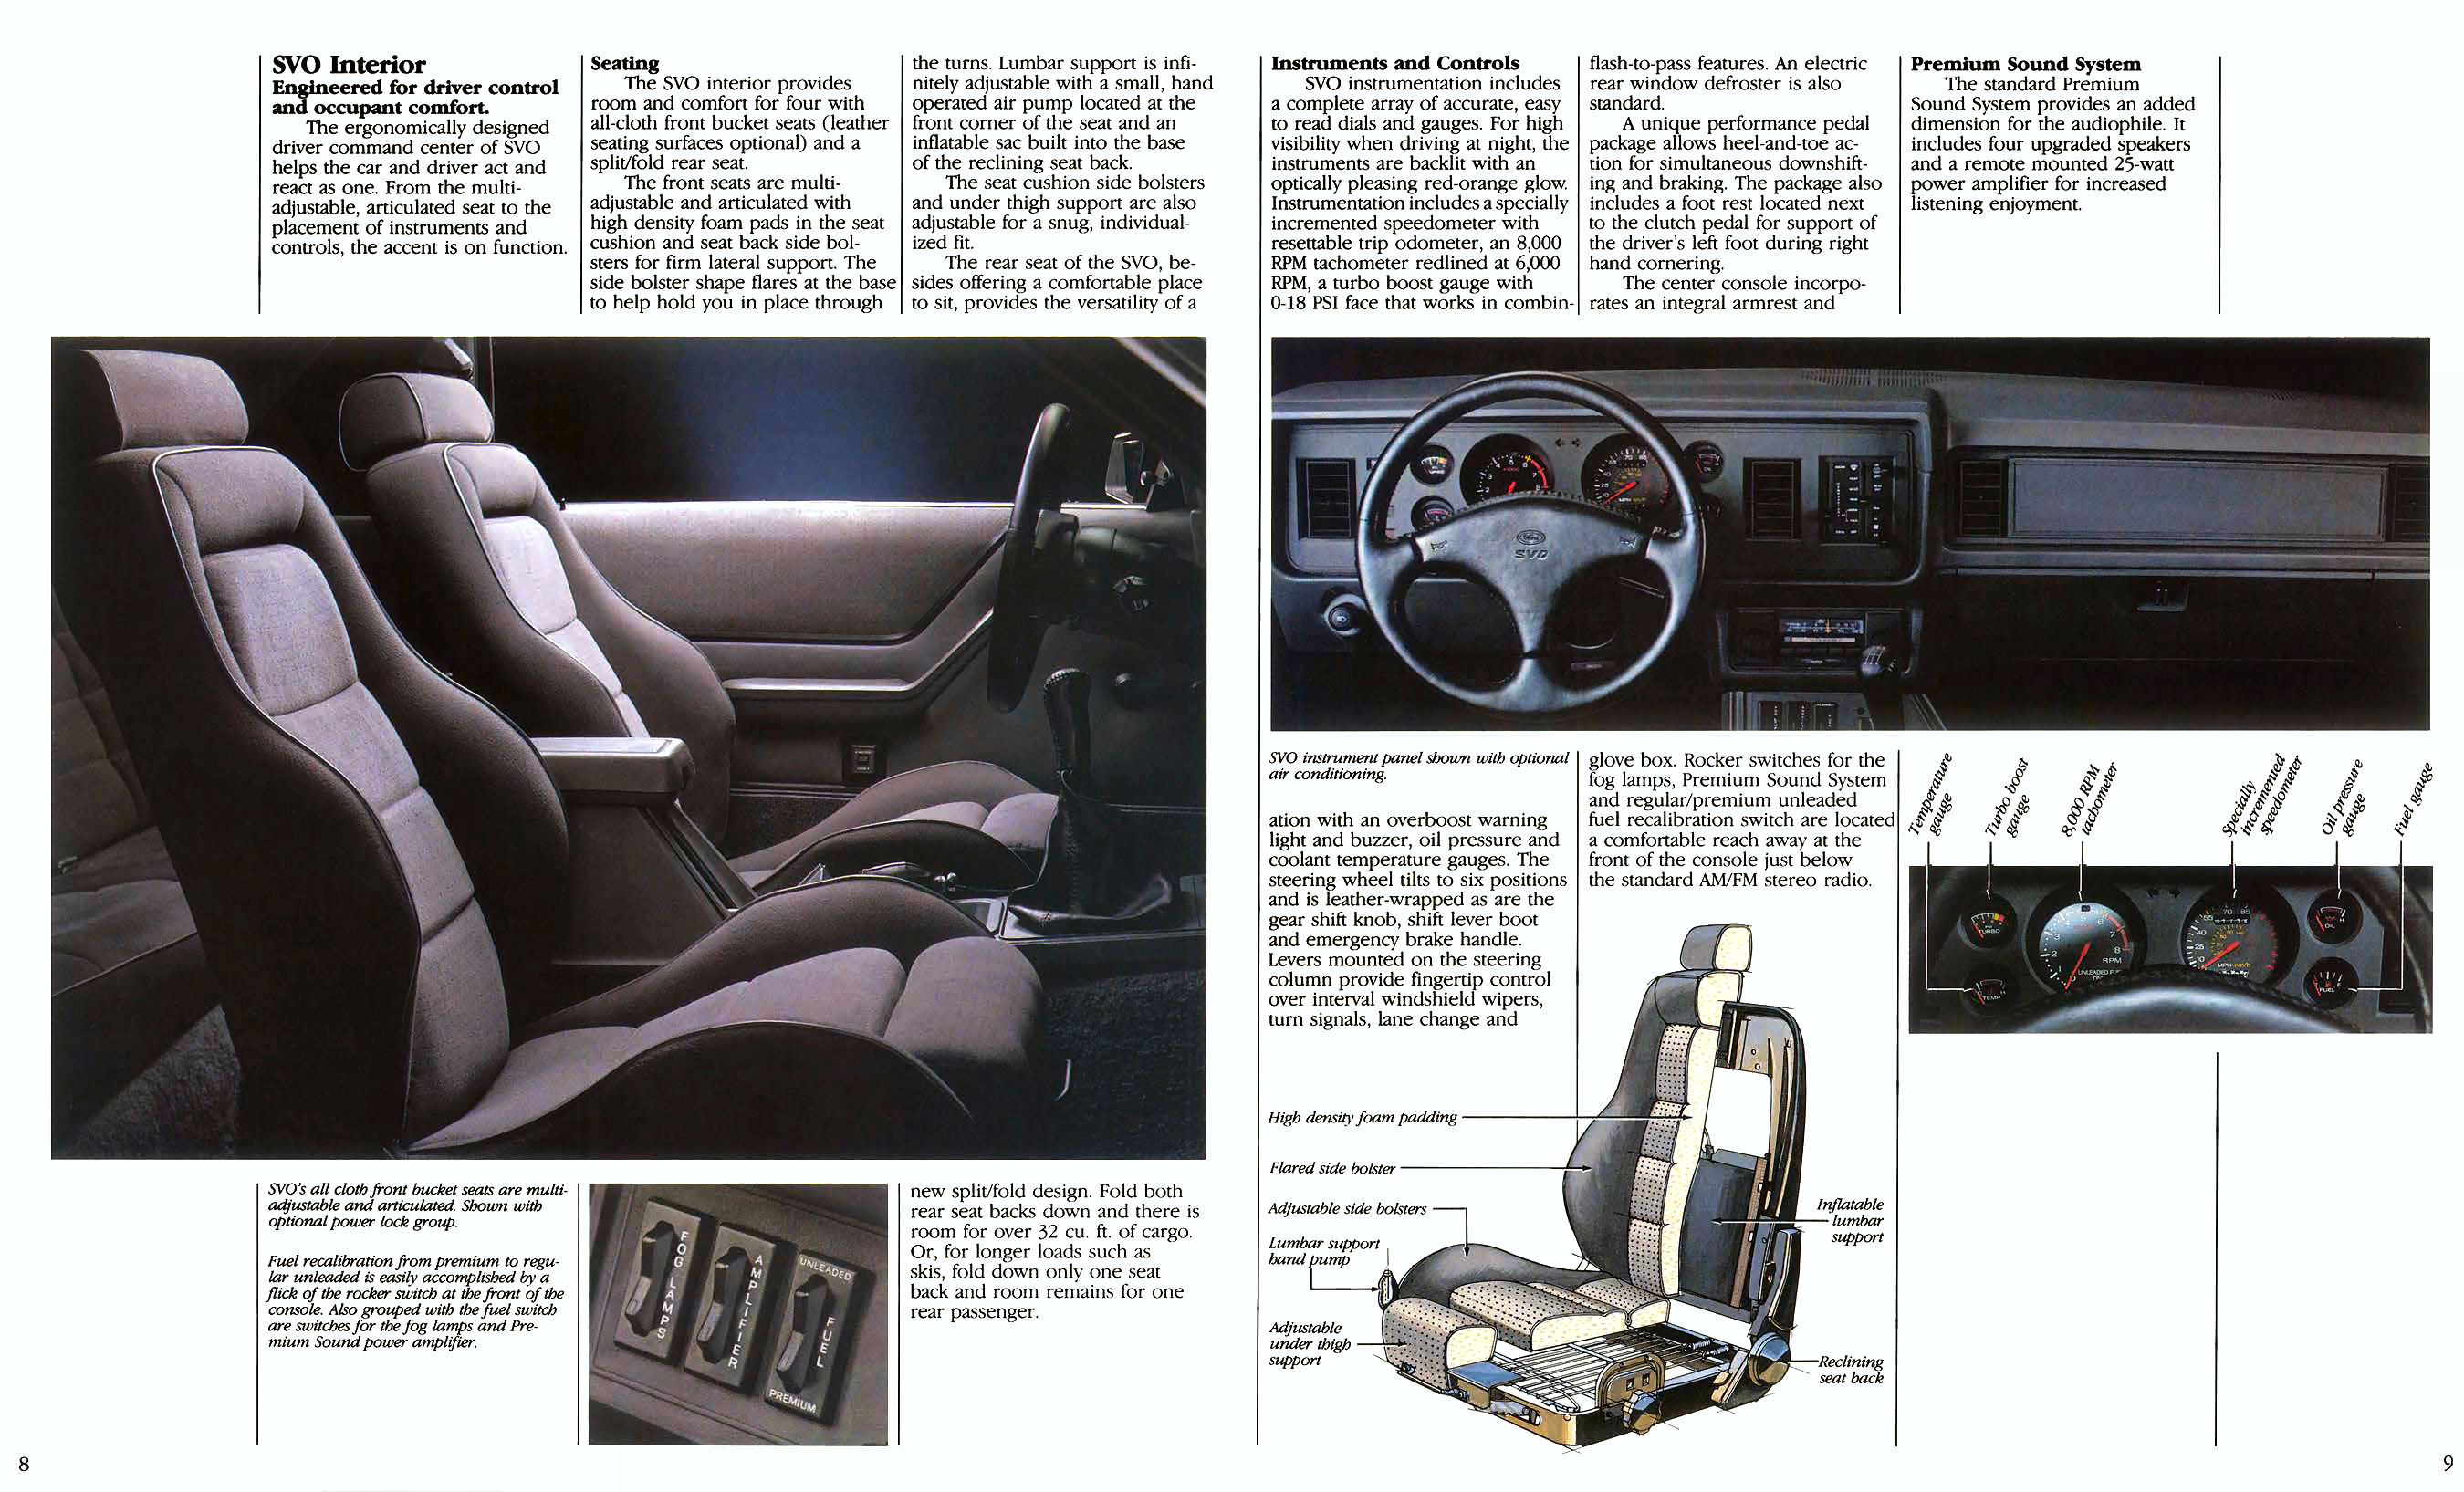 1984_Ford_Mustang_SVO-08-09